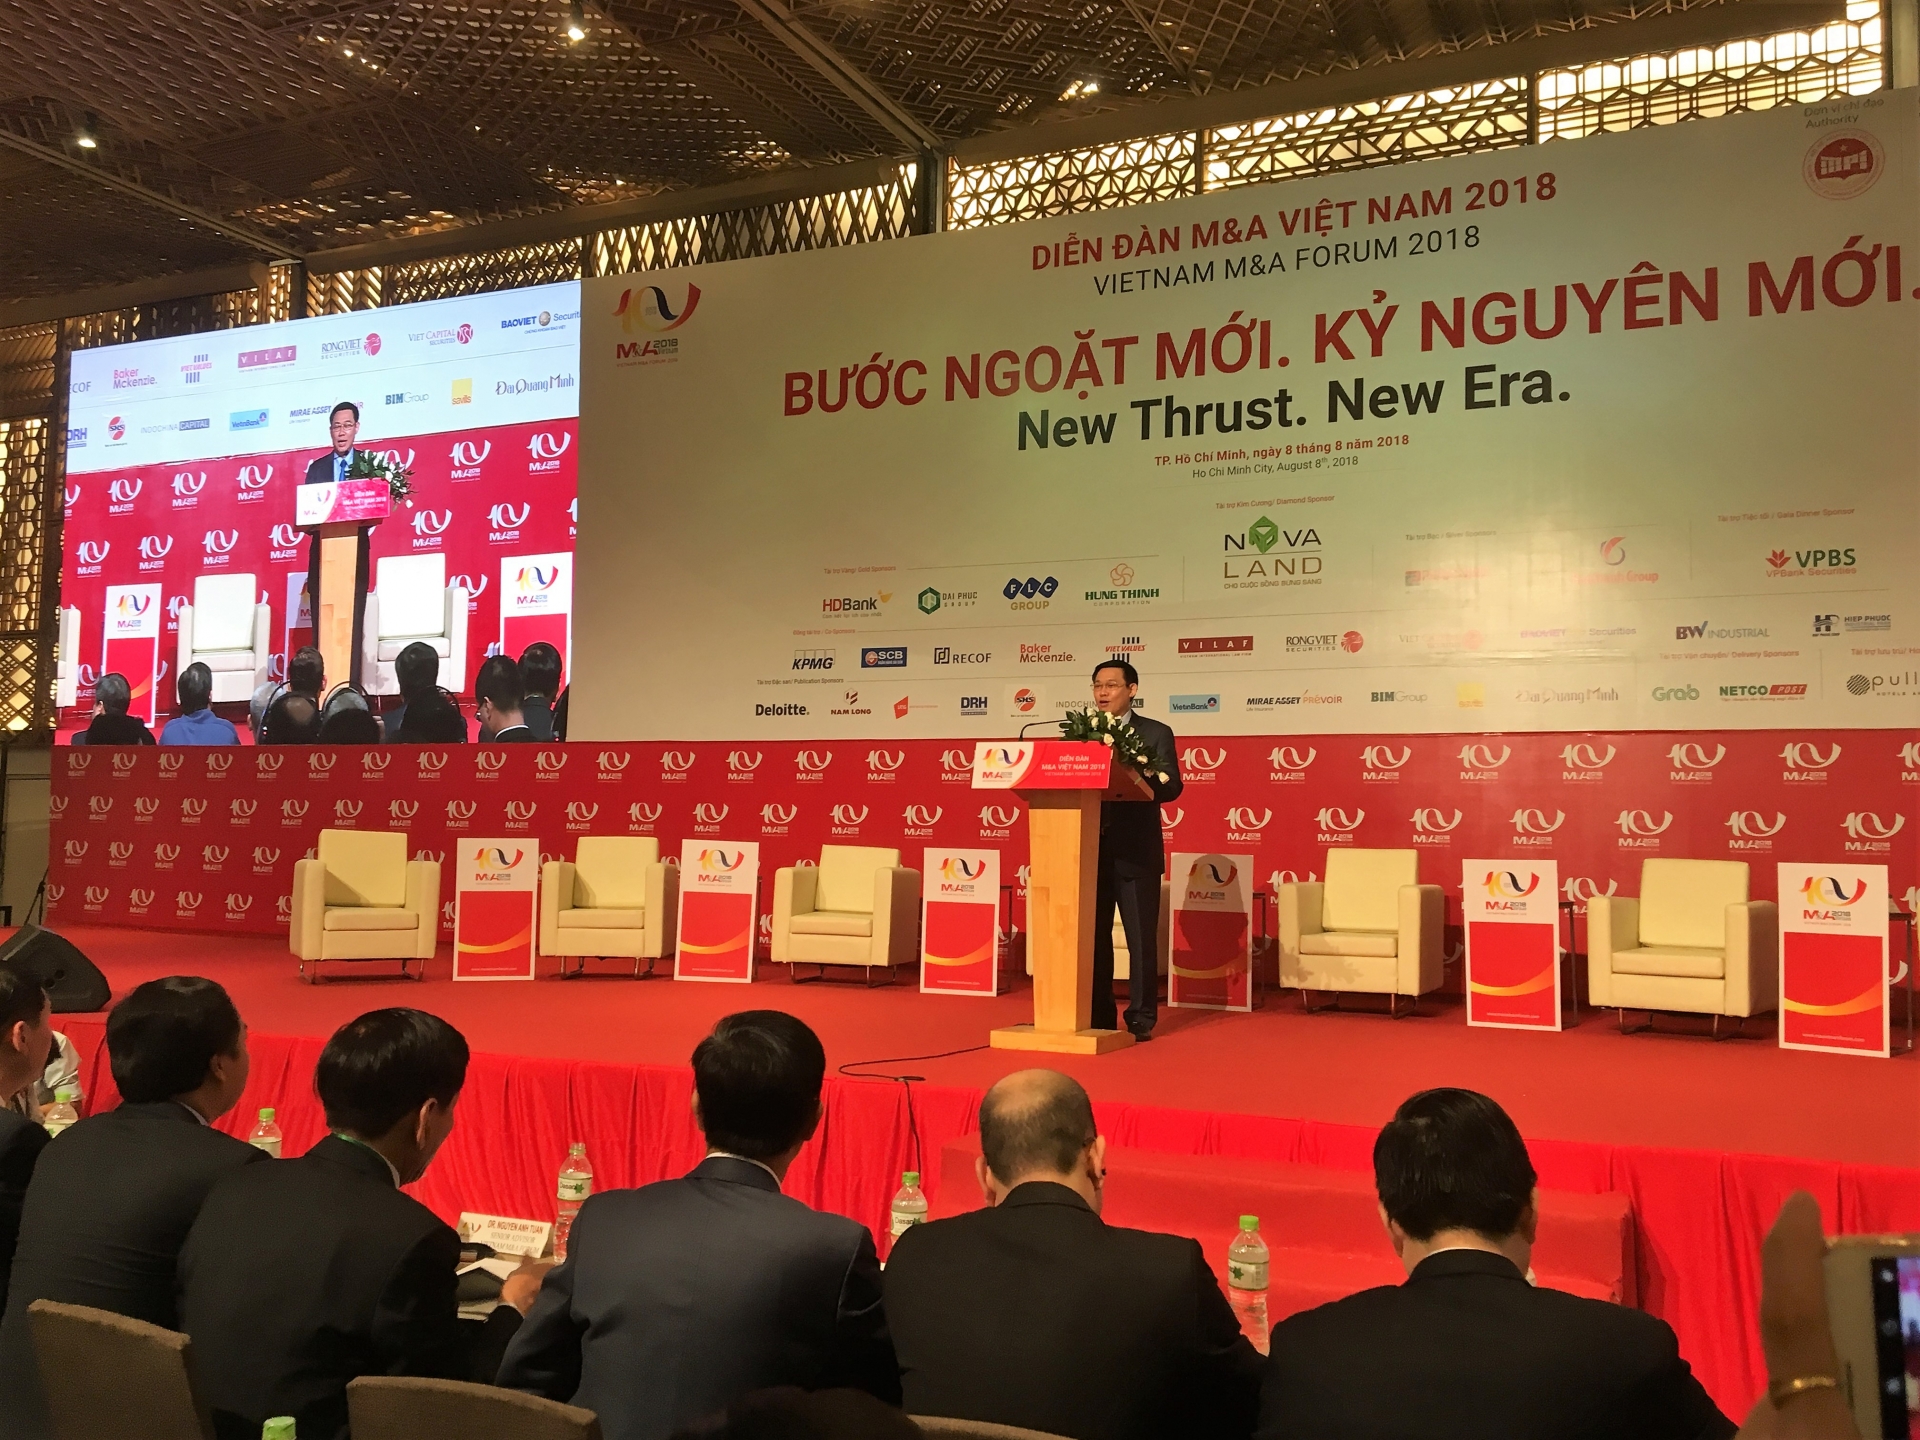 Vietnam M&A Forum 2018 opens 10th edition